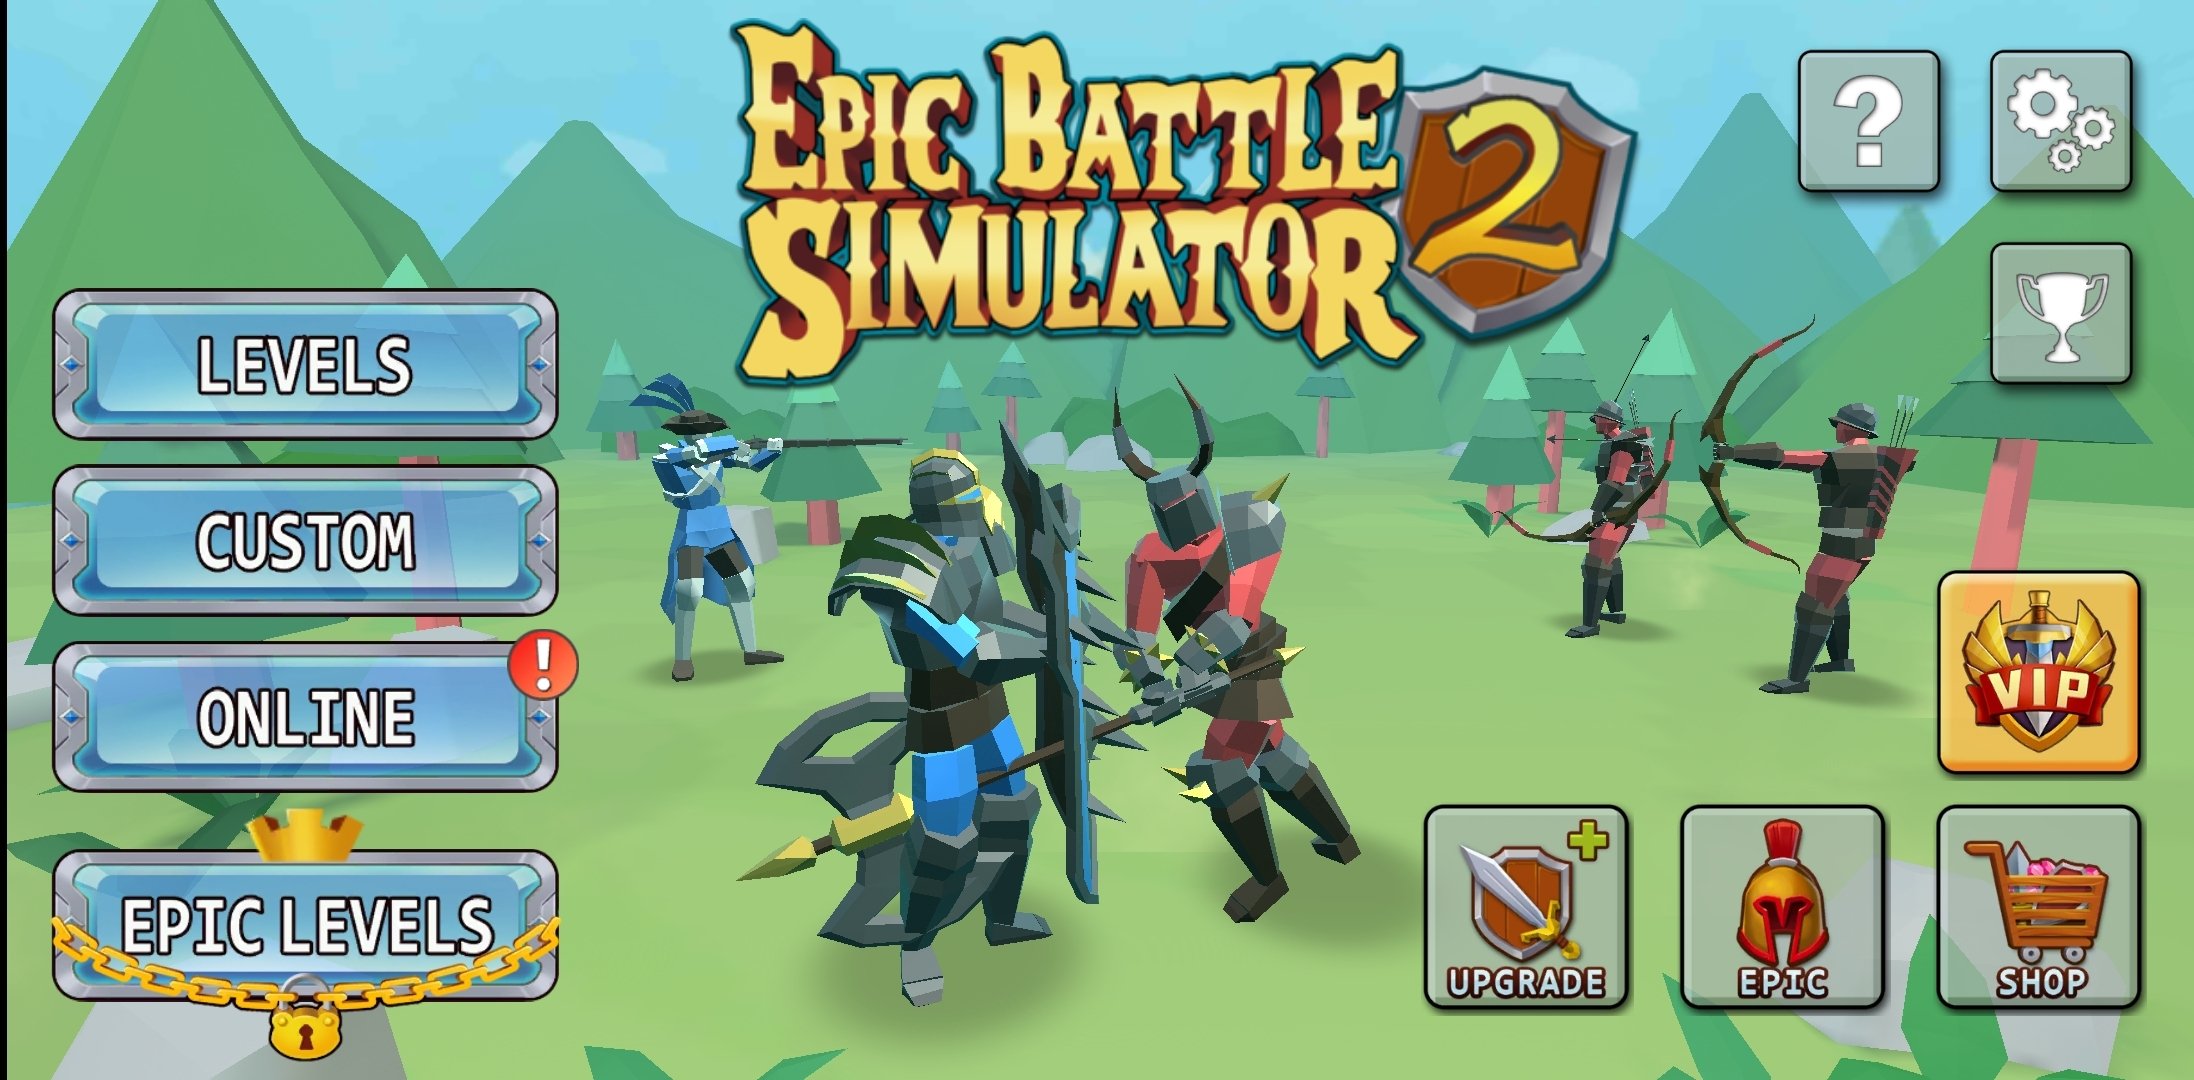 ultimate epic battle simulators free download